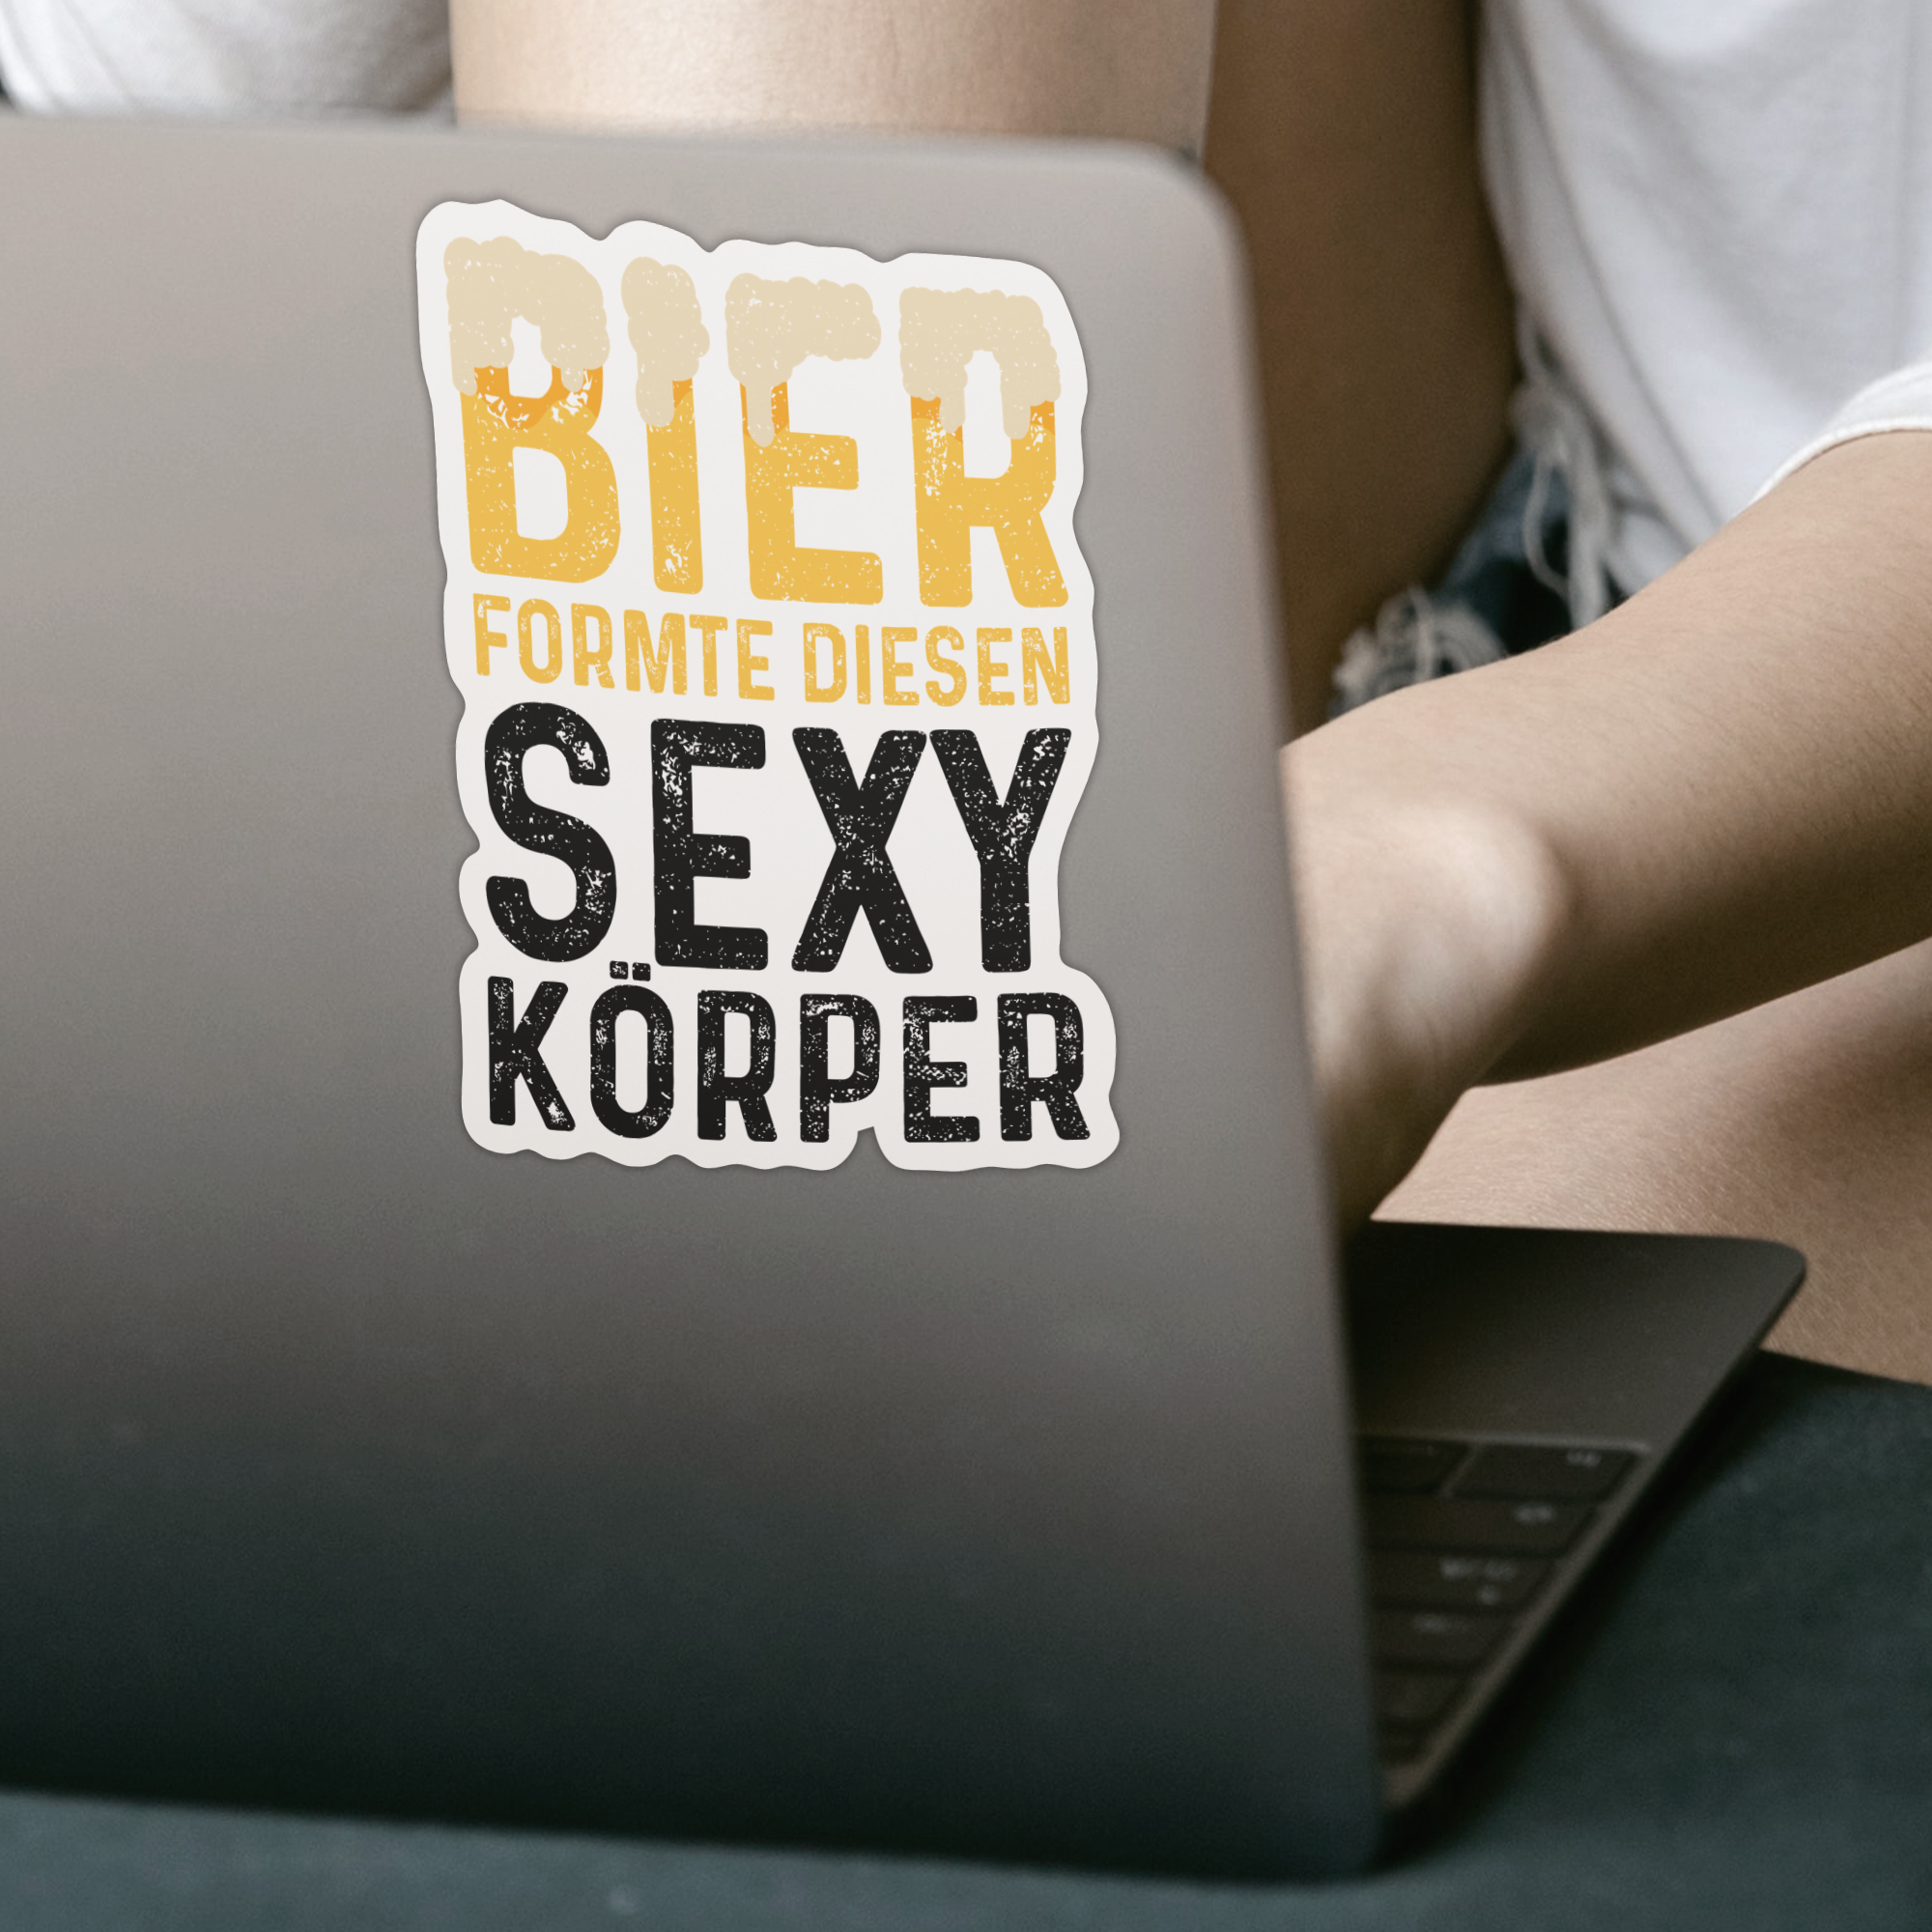 Bier Formte Diesen Sexy Körper Sticker - DESIGNSBYJNK5.COM